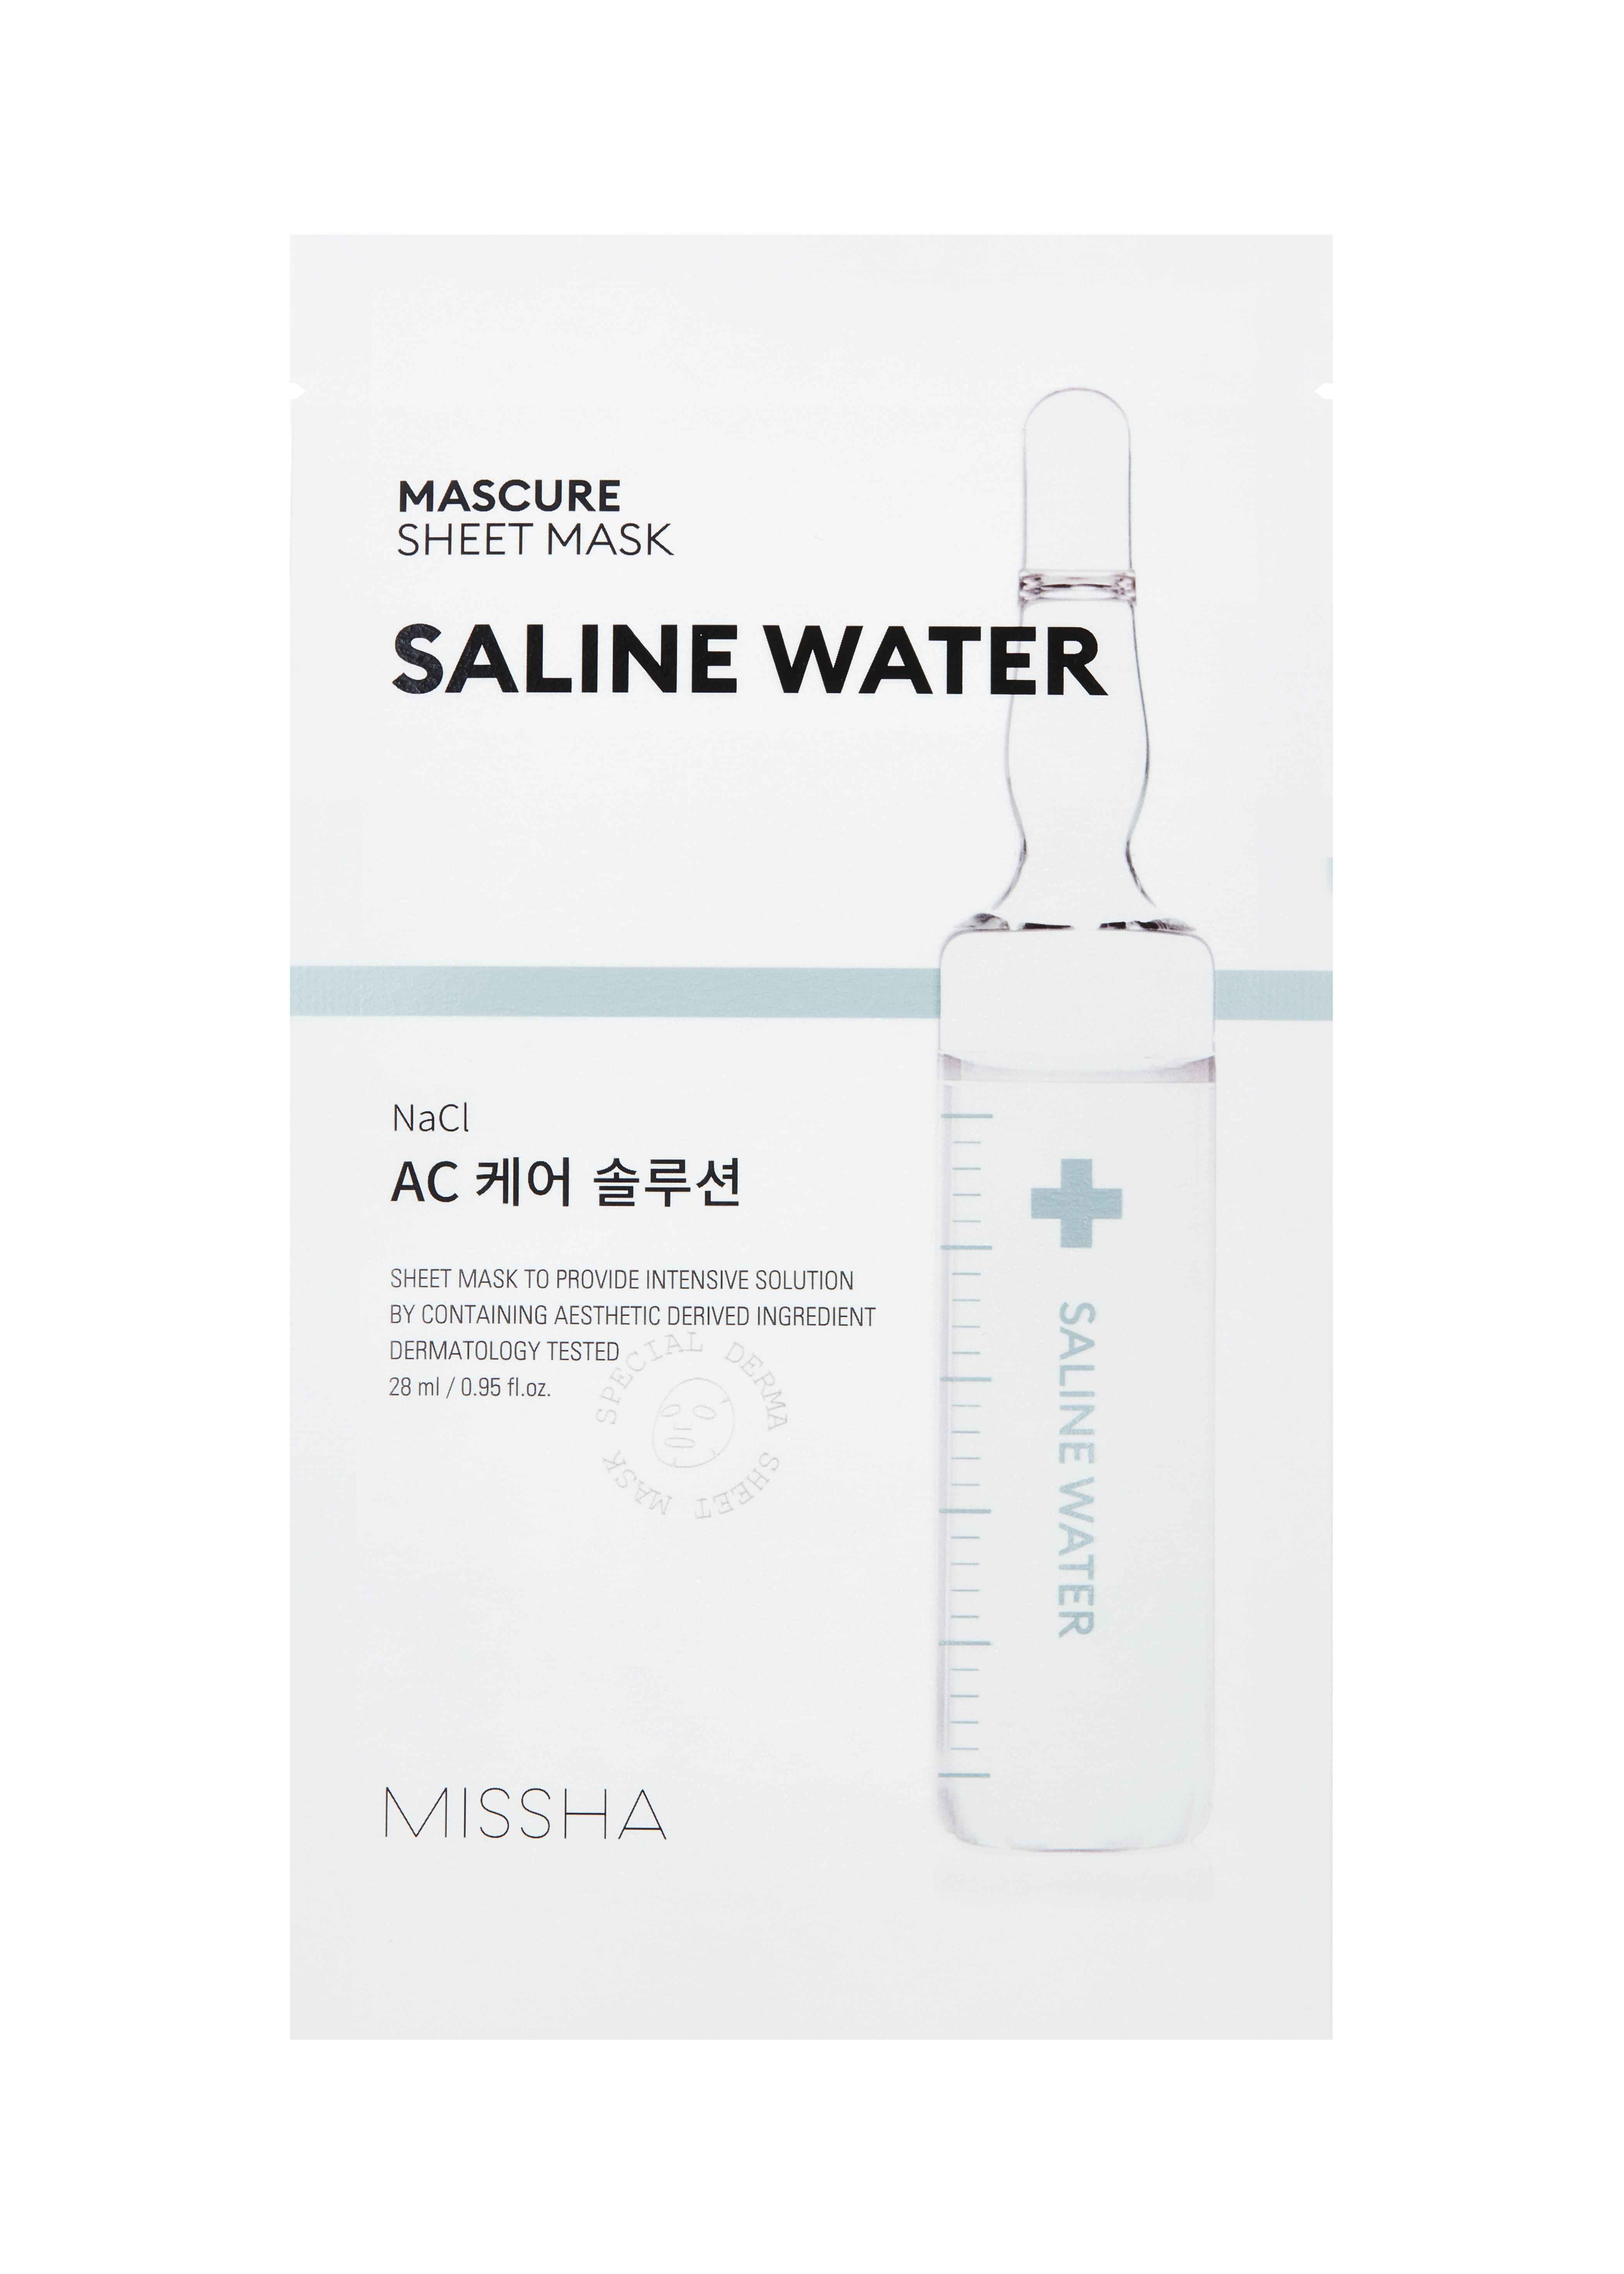 Missha Mascure AС Care Solution Sheet Mask Saline Water 27 ml  1 sheet